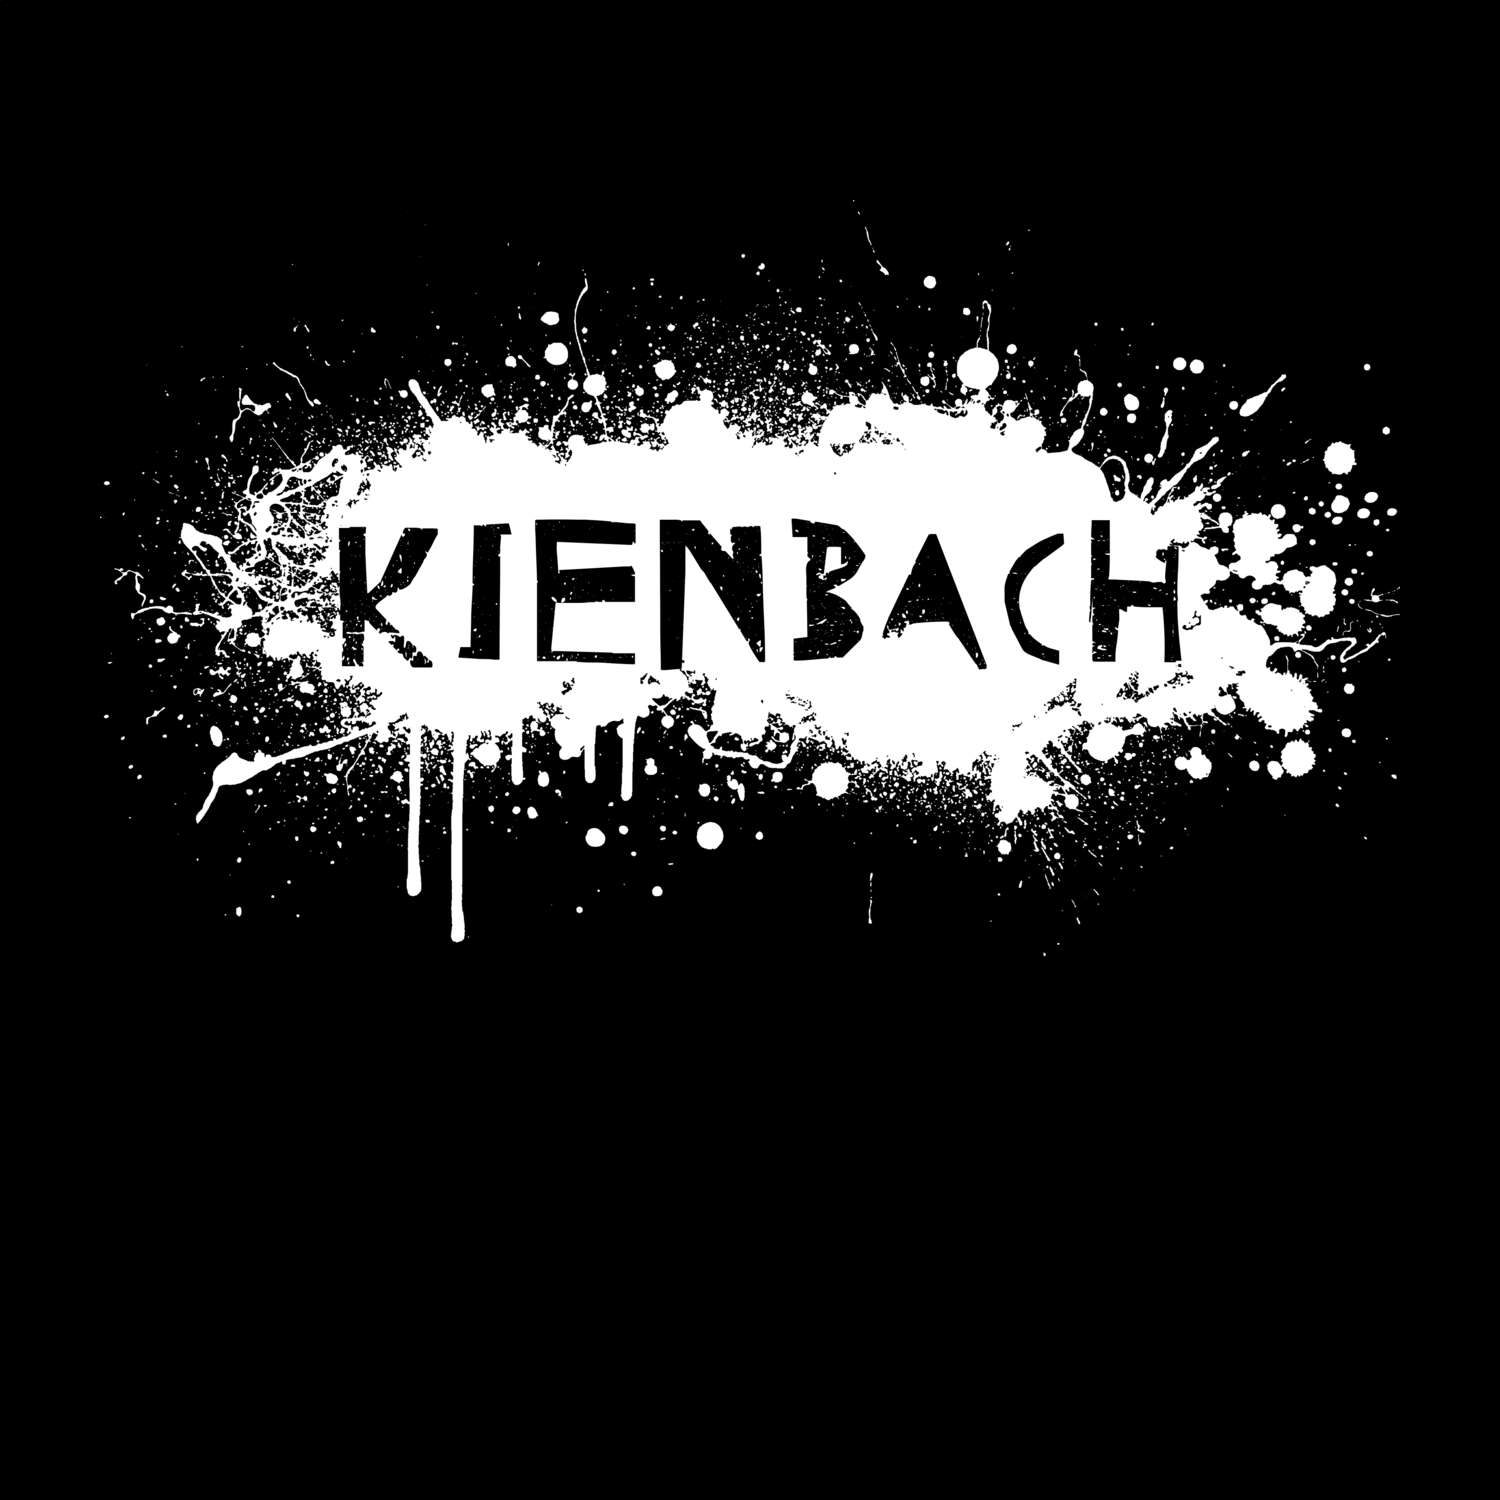 Kienbach T-Shirt »Paint Splash Punk«